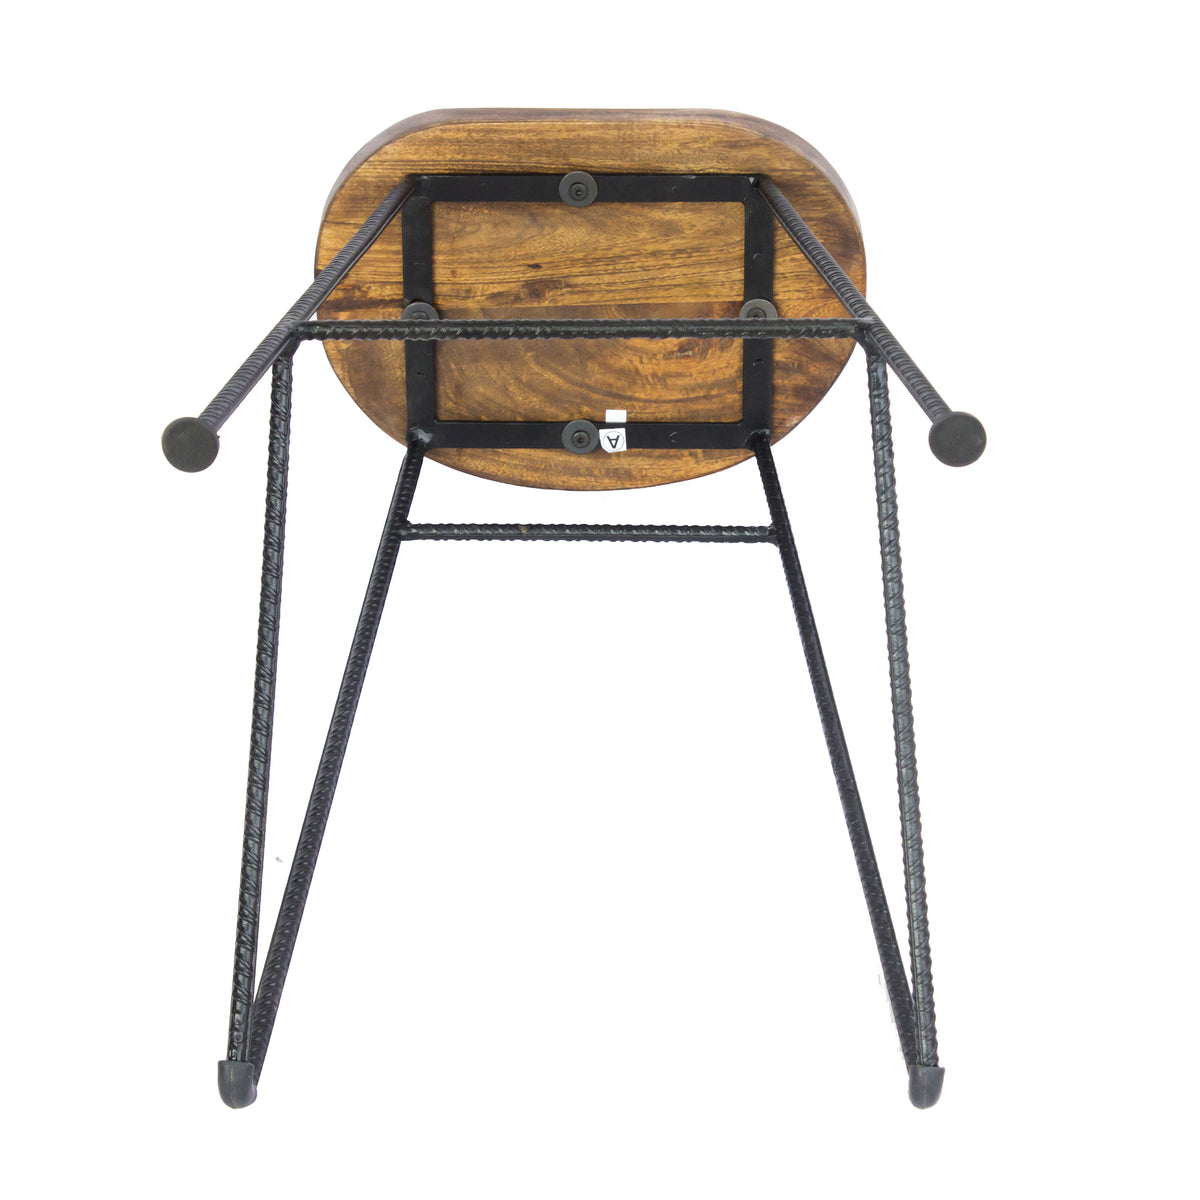 Mango Wood Saddle Seat Bar Stool With Iron Rod Legs, Brown and Black - UPT-183797